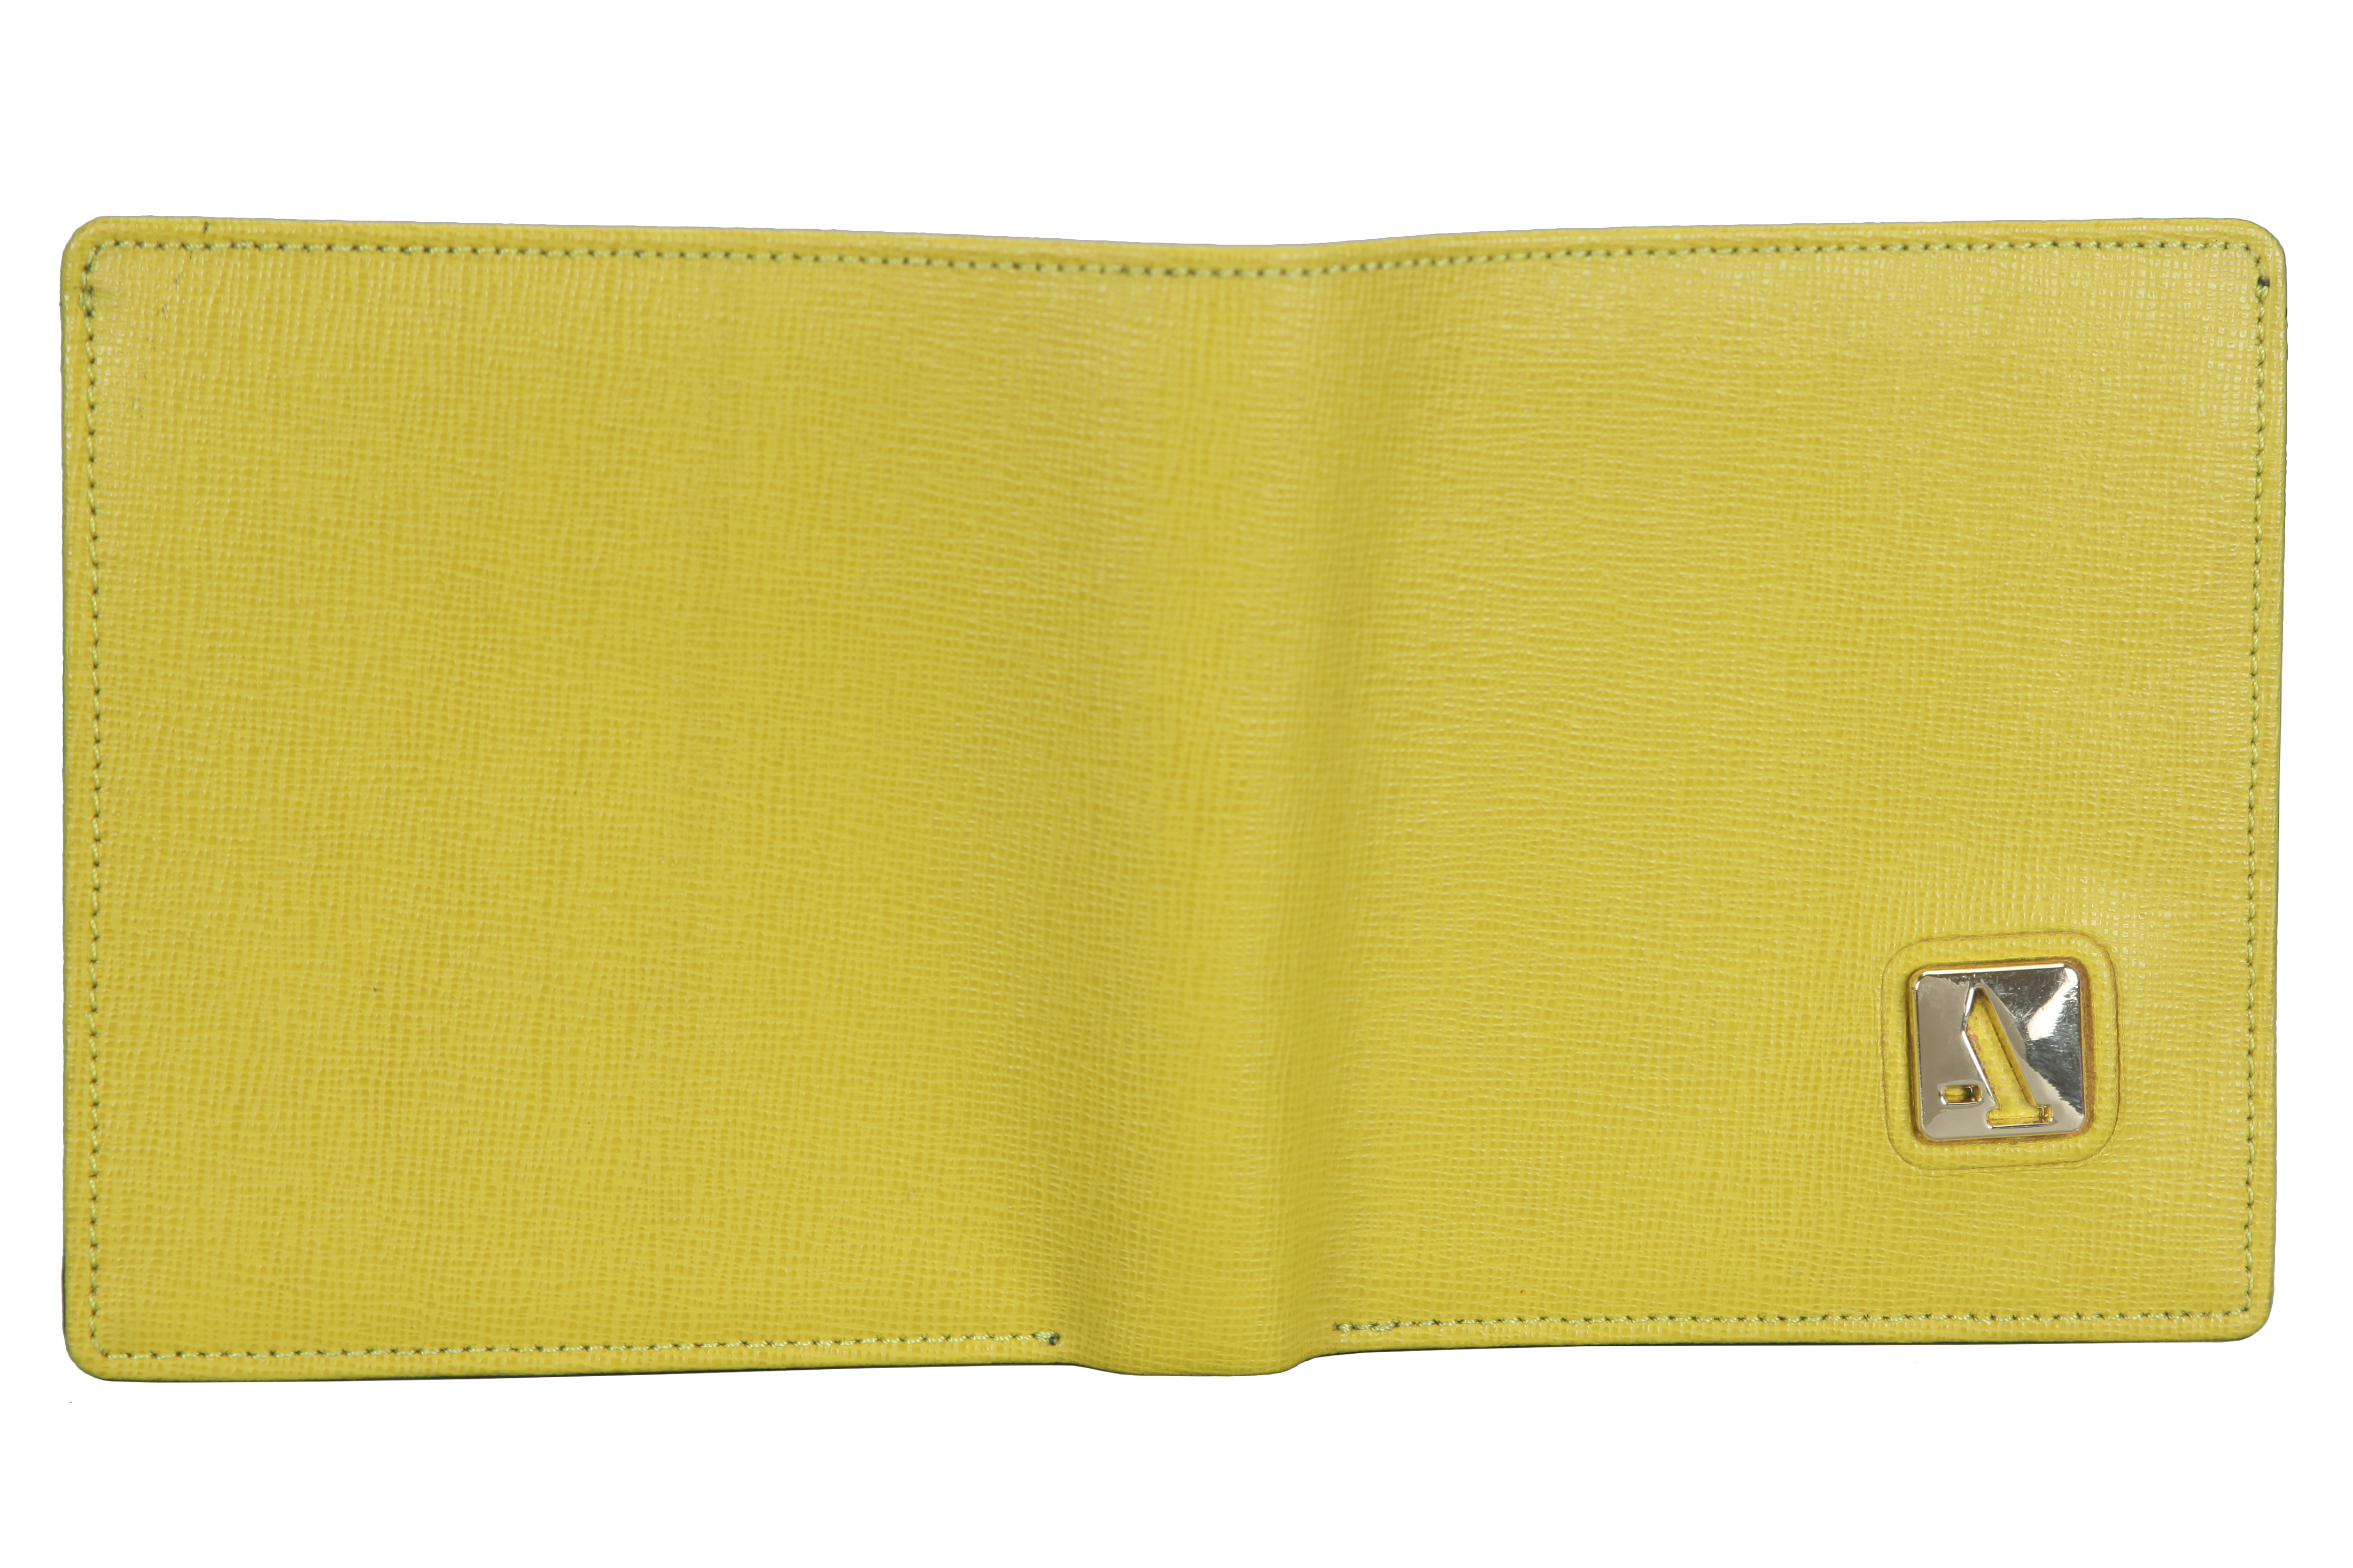 Wallet-Alabama-Women's bifold wallet in Genuine Leather - Yellow/Black